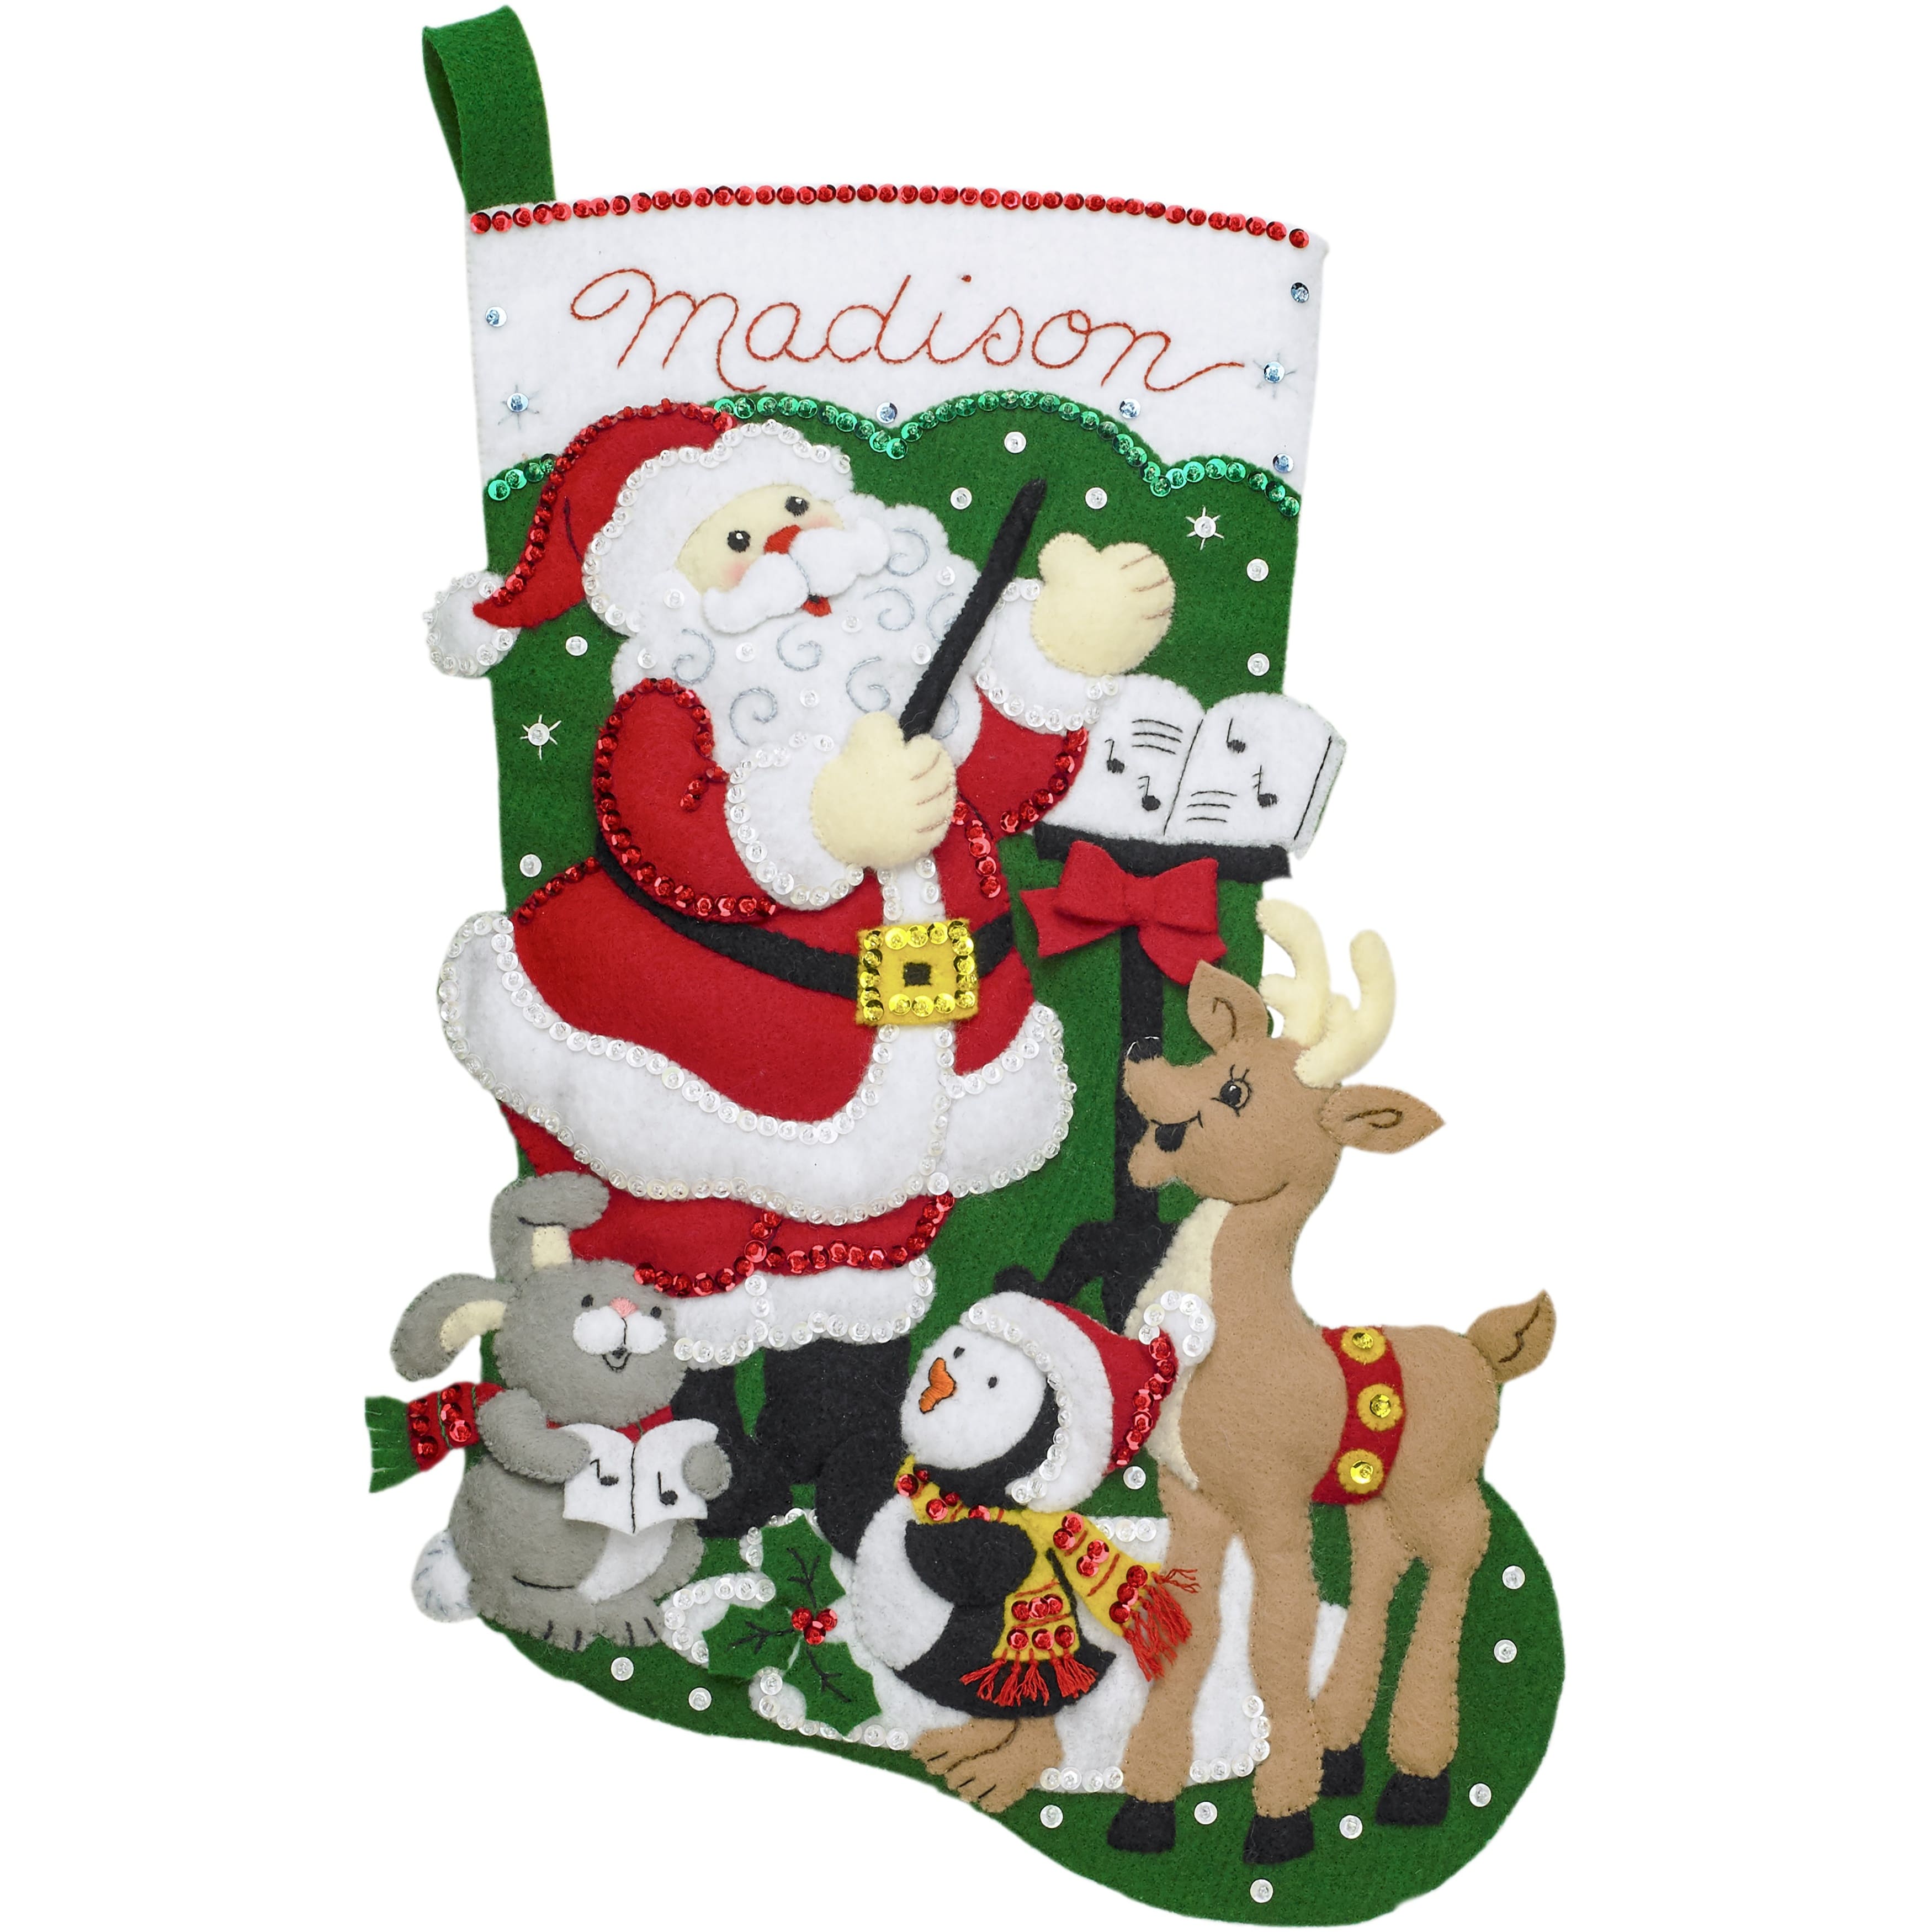 Bucilla Santa's List Stocking Felt Applique Kit, 18L